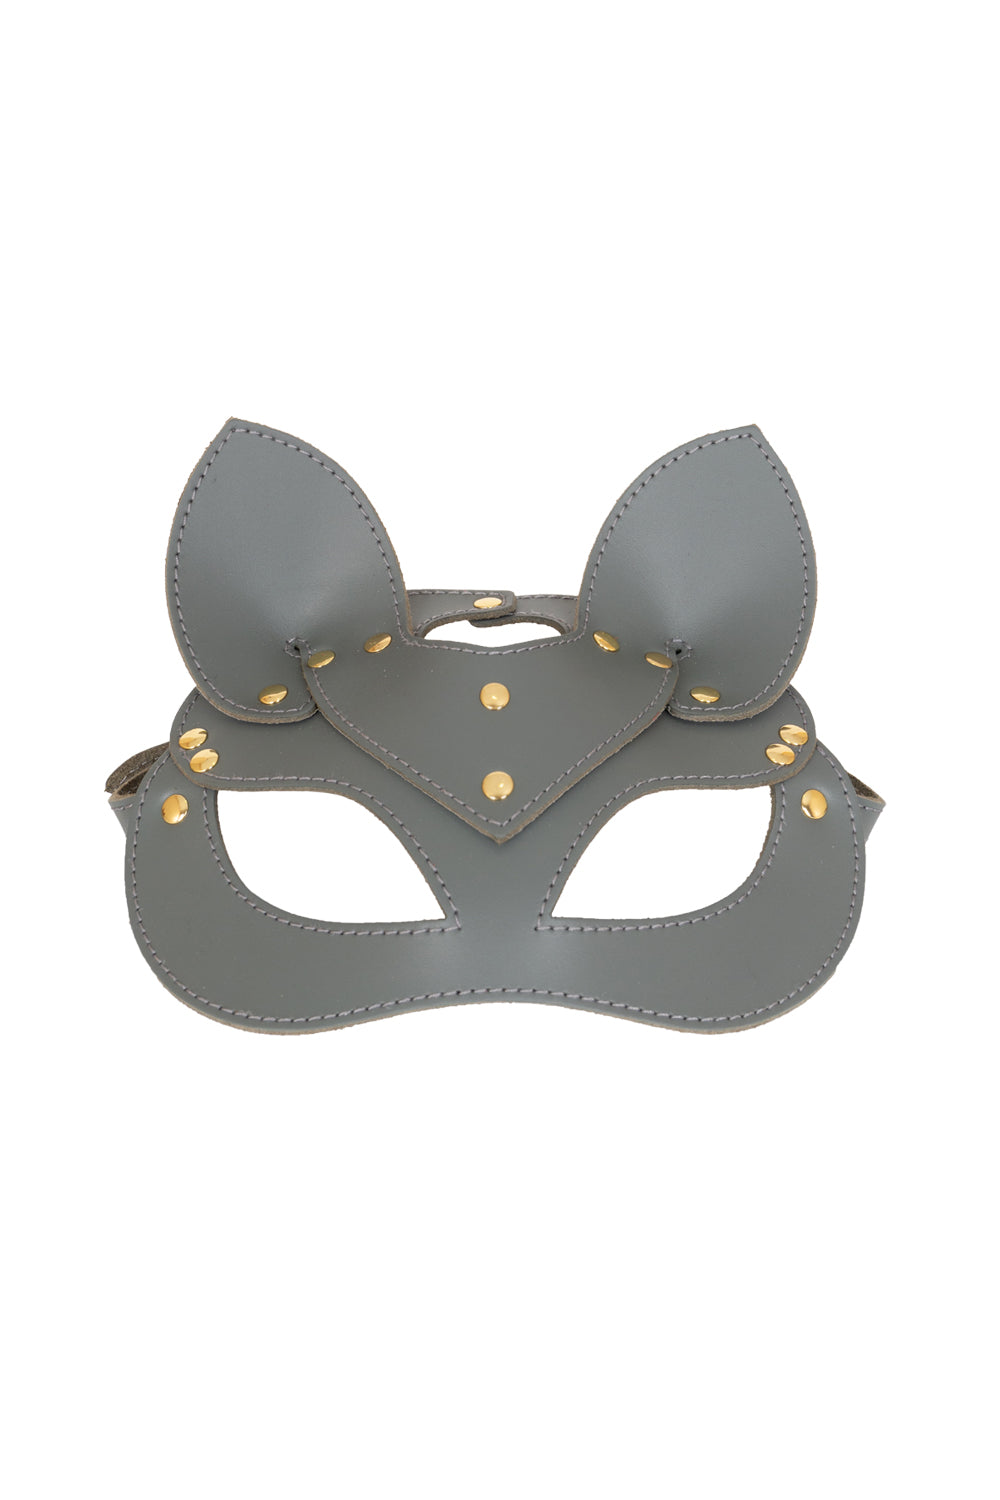 Leather сat mask, kitty fetish mask. White